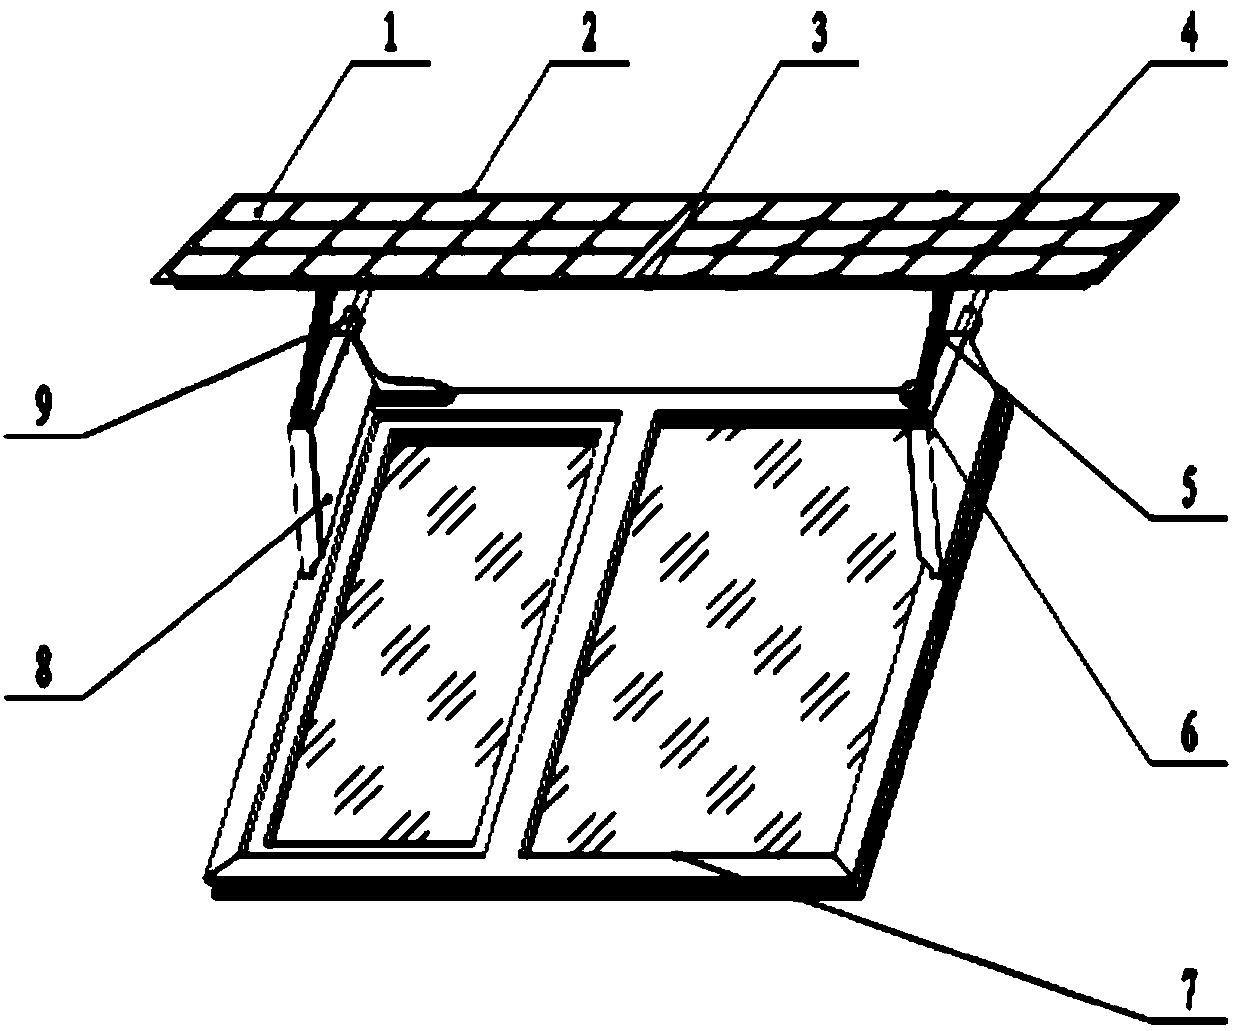 Solar four-micro window